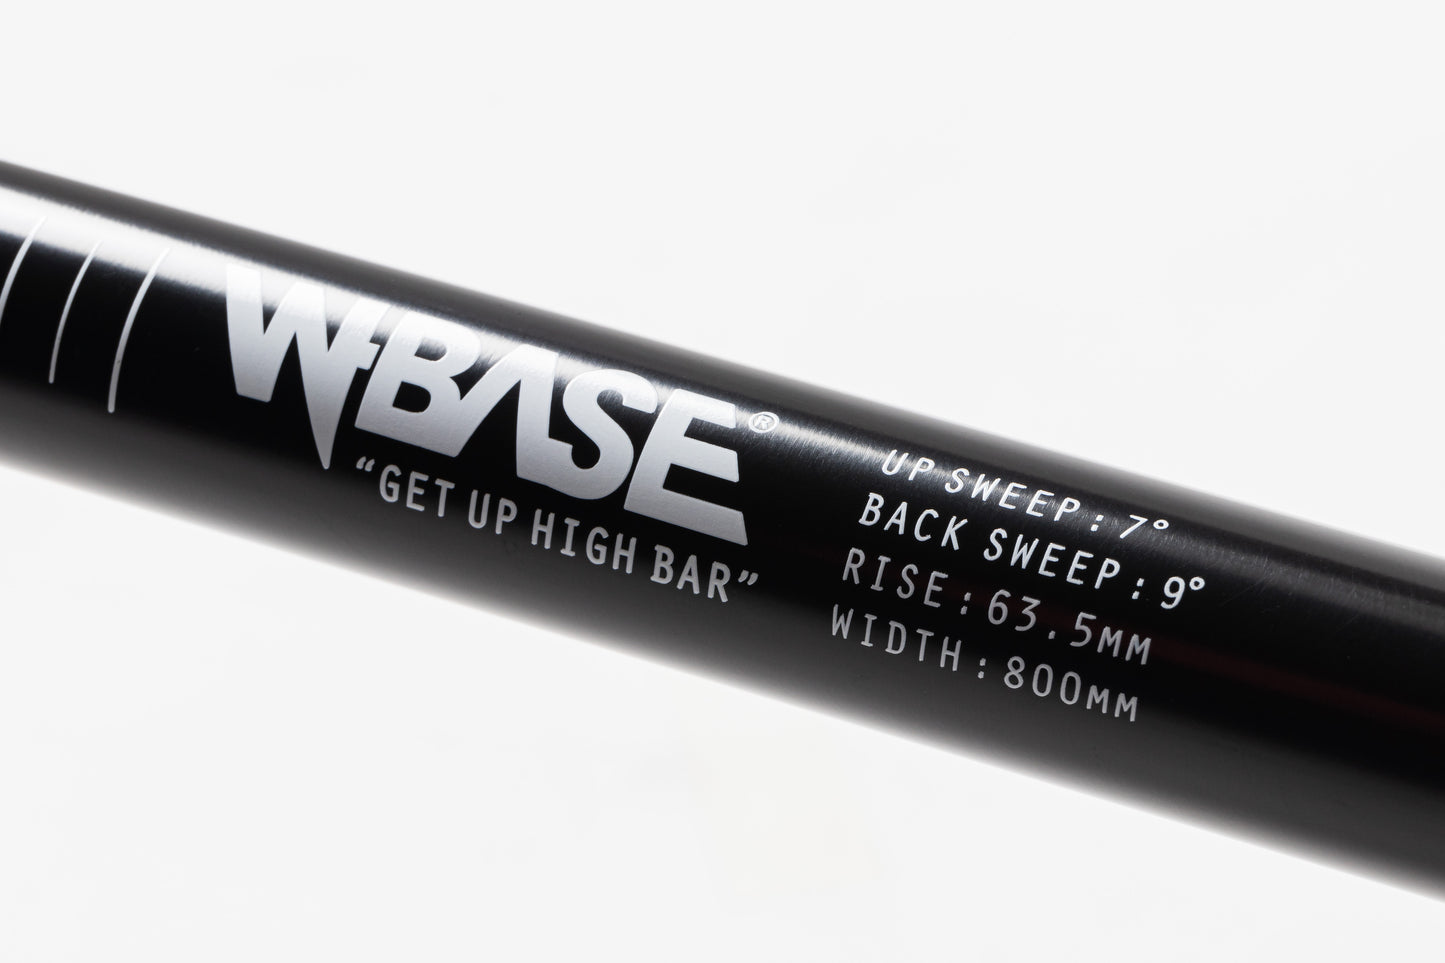 W-BASE - Get Up High Bar (black)